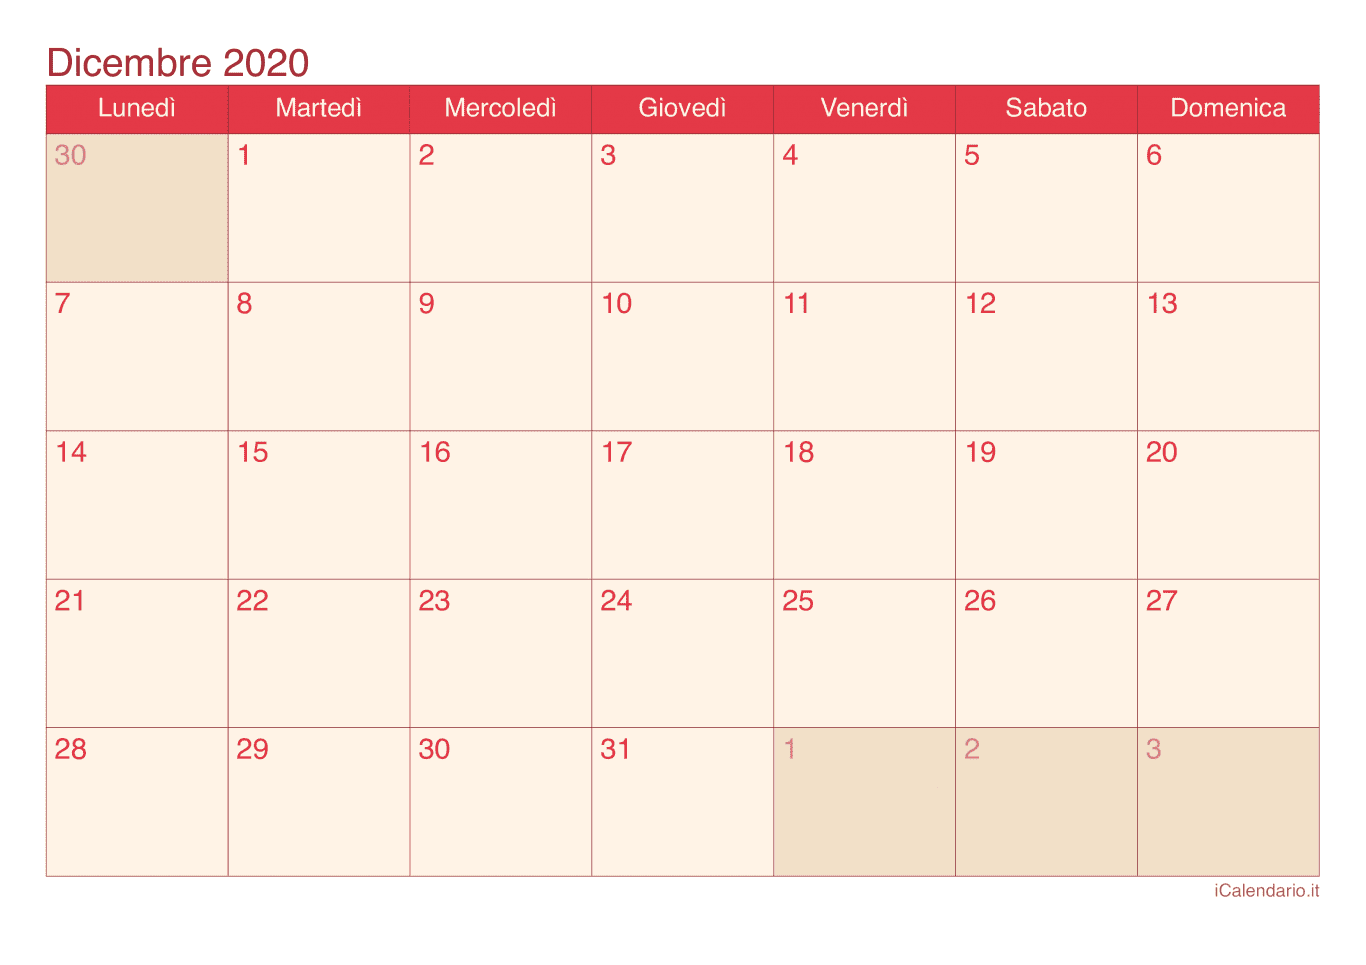 Calendario di dicembre 2020 - Cherry